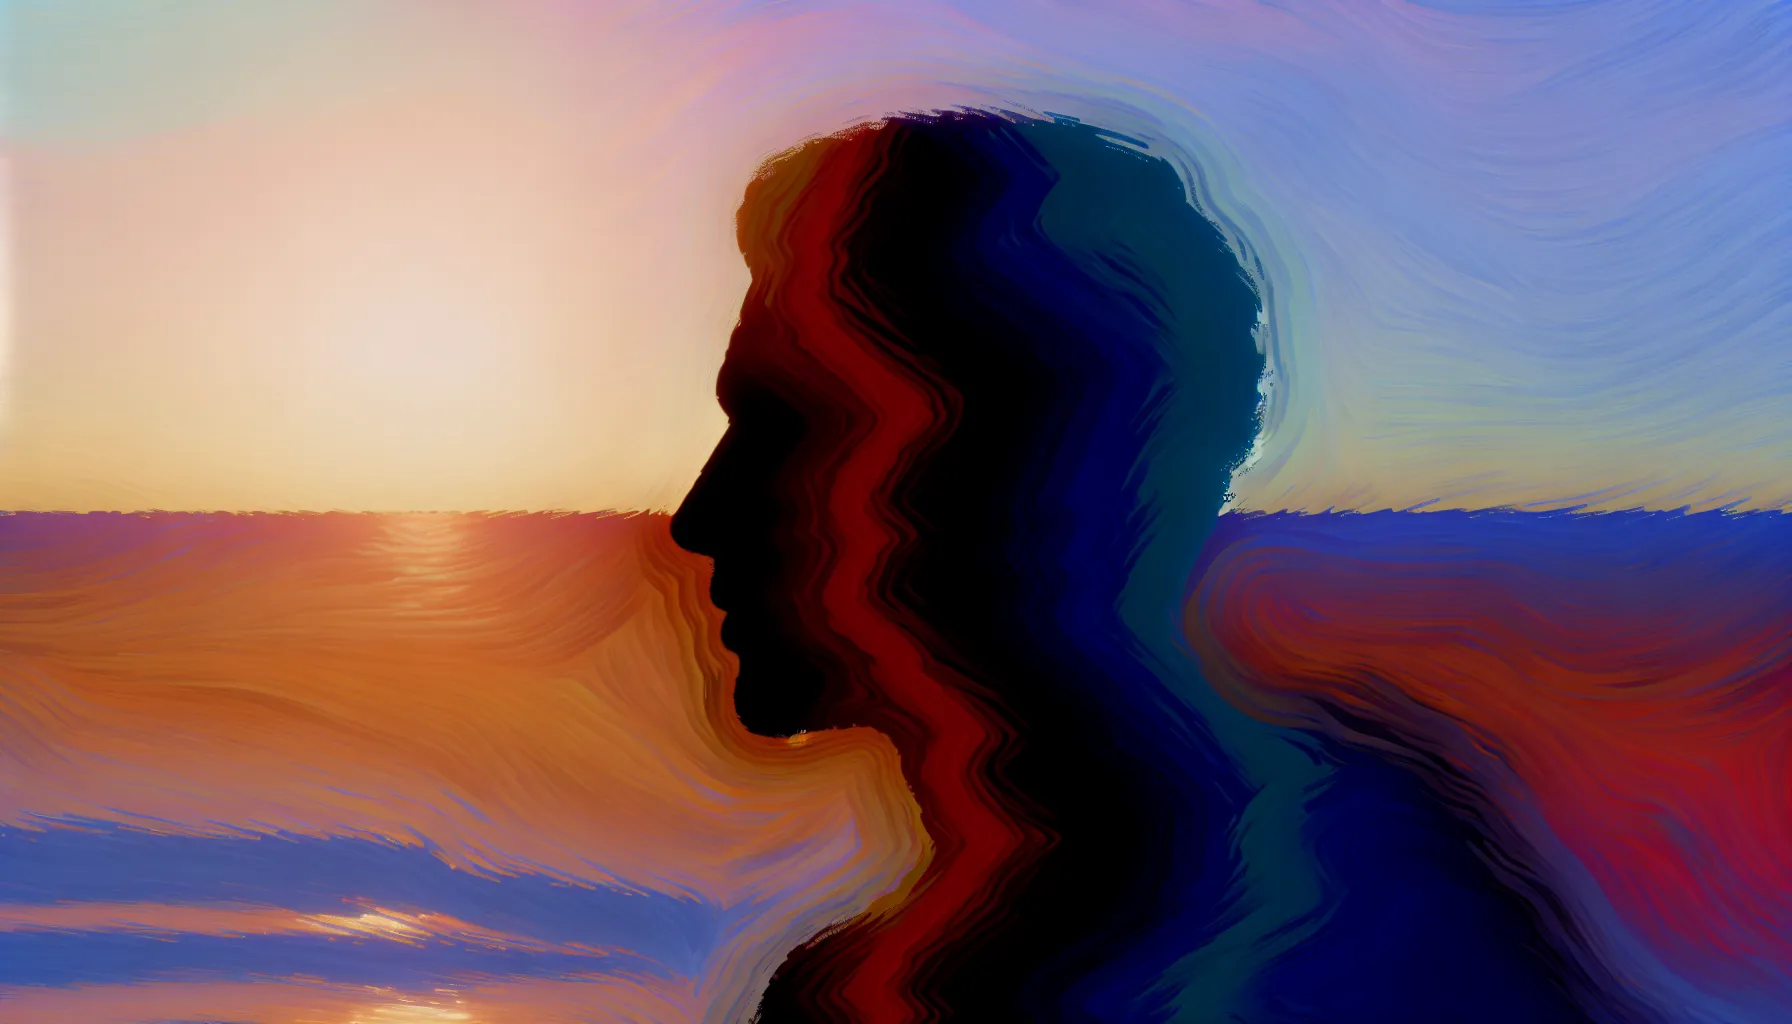 Silhouette of a man gazing into the horizon